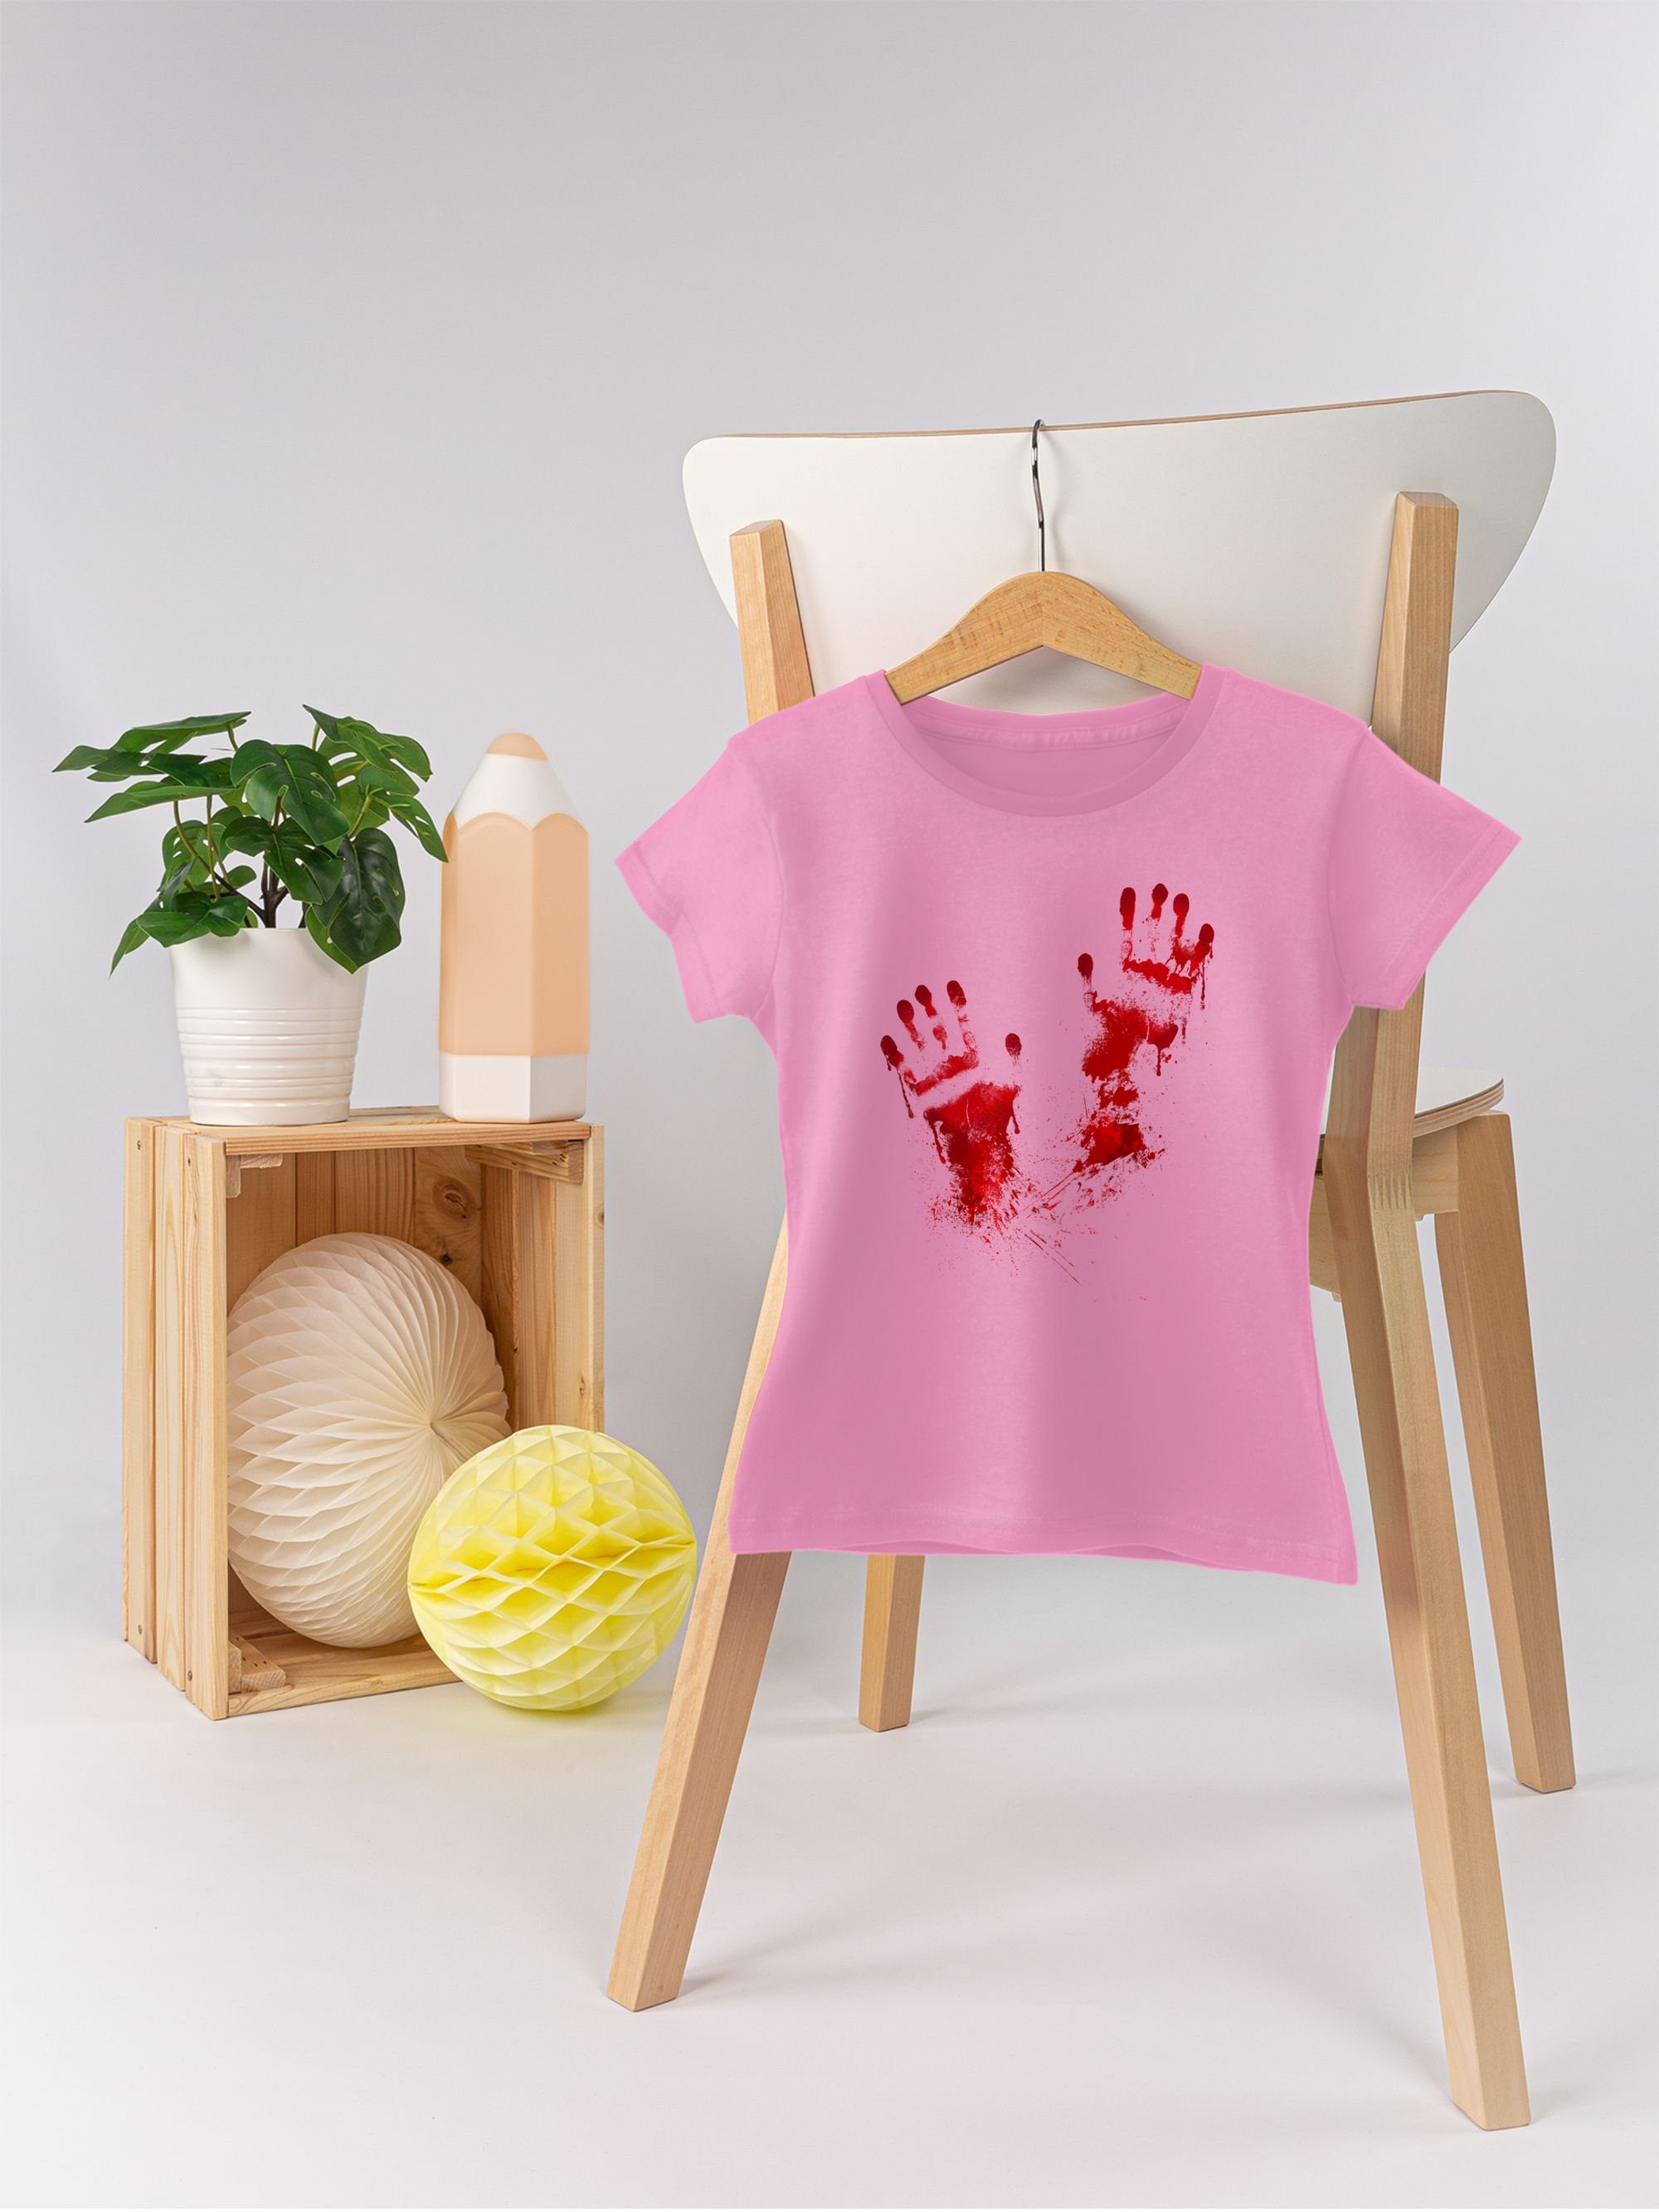 für Rosa Handabdruck Gruselig Halloween 2 Kinder T-Shirt Shirtracer Handabdrücke Blutige Kostüme Blut